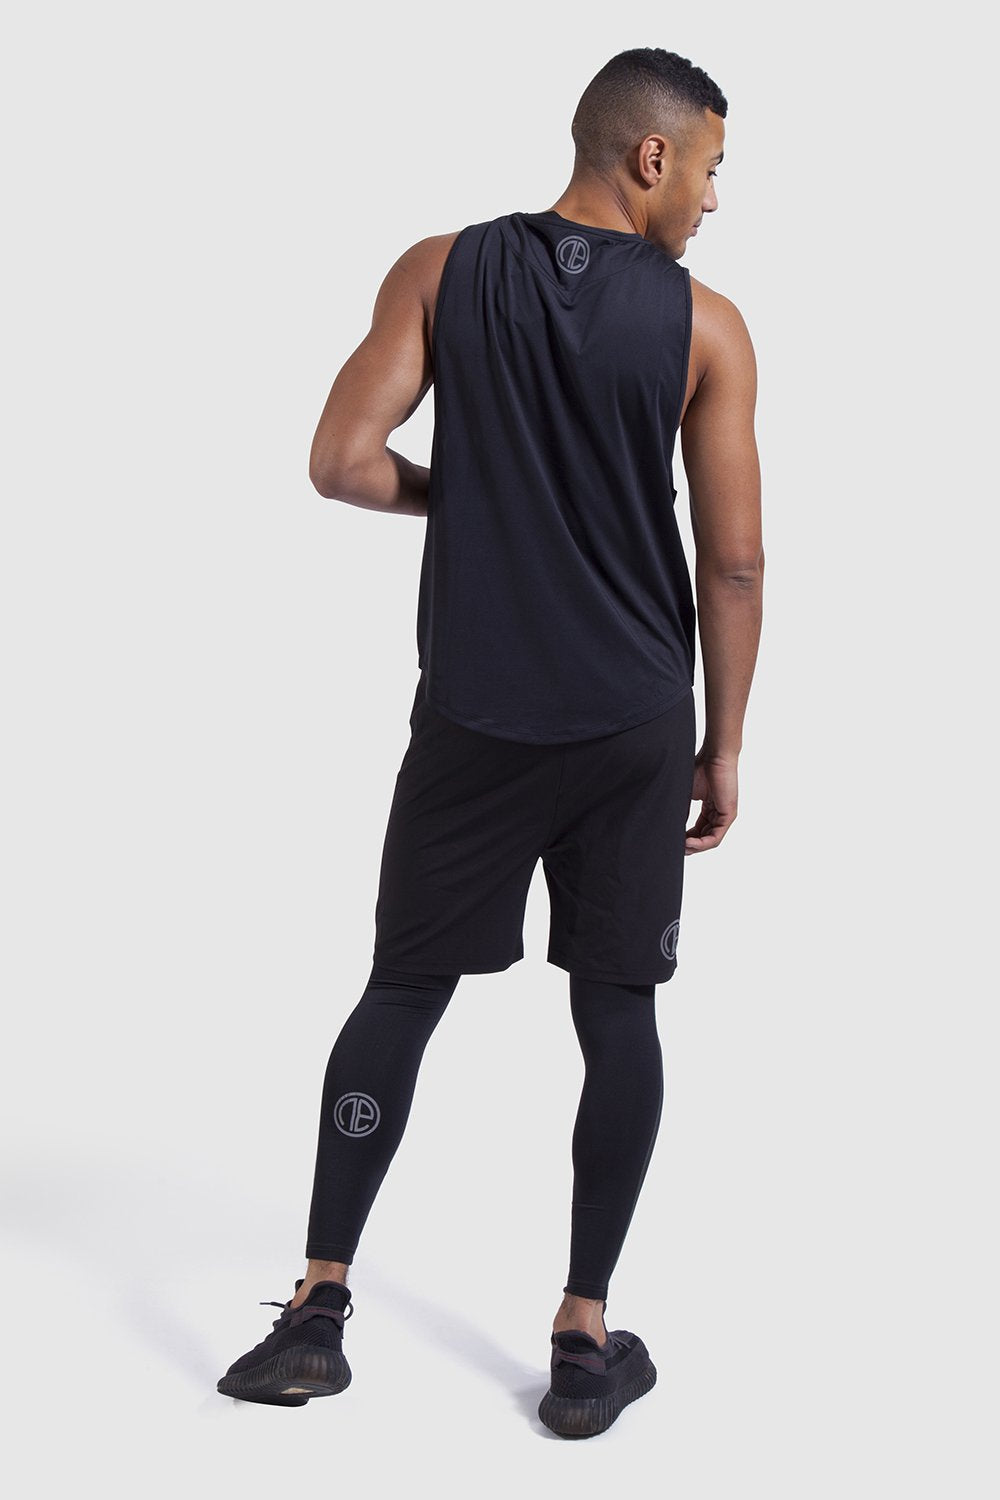 training vest, shorts and leggings in black